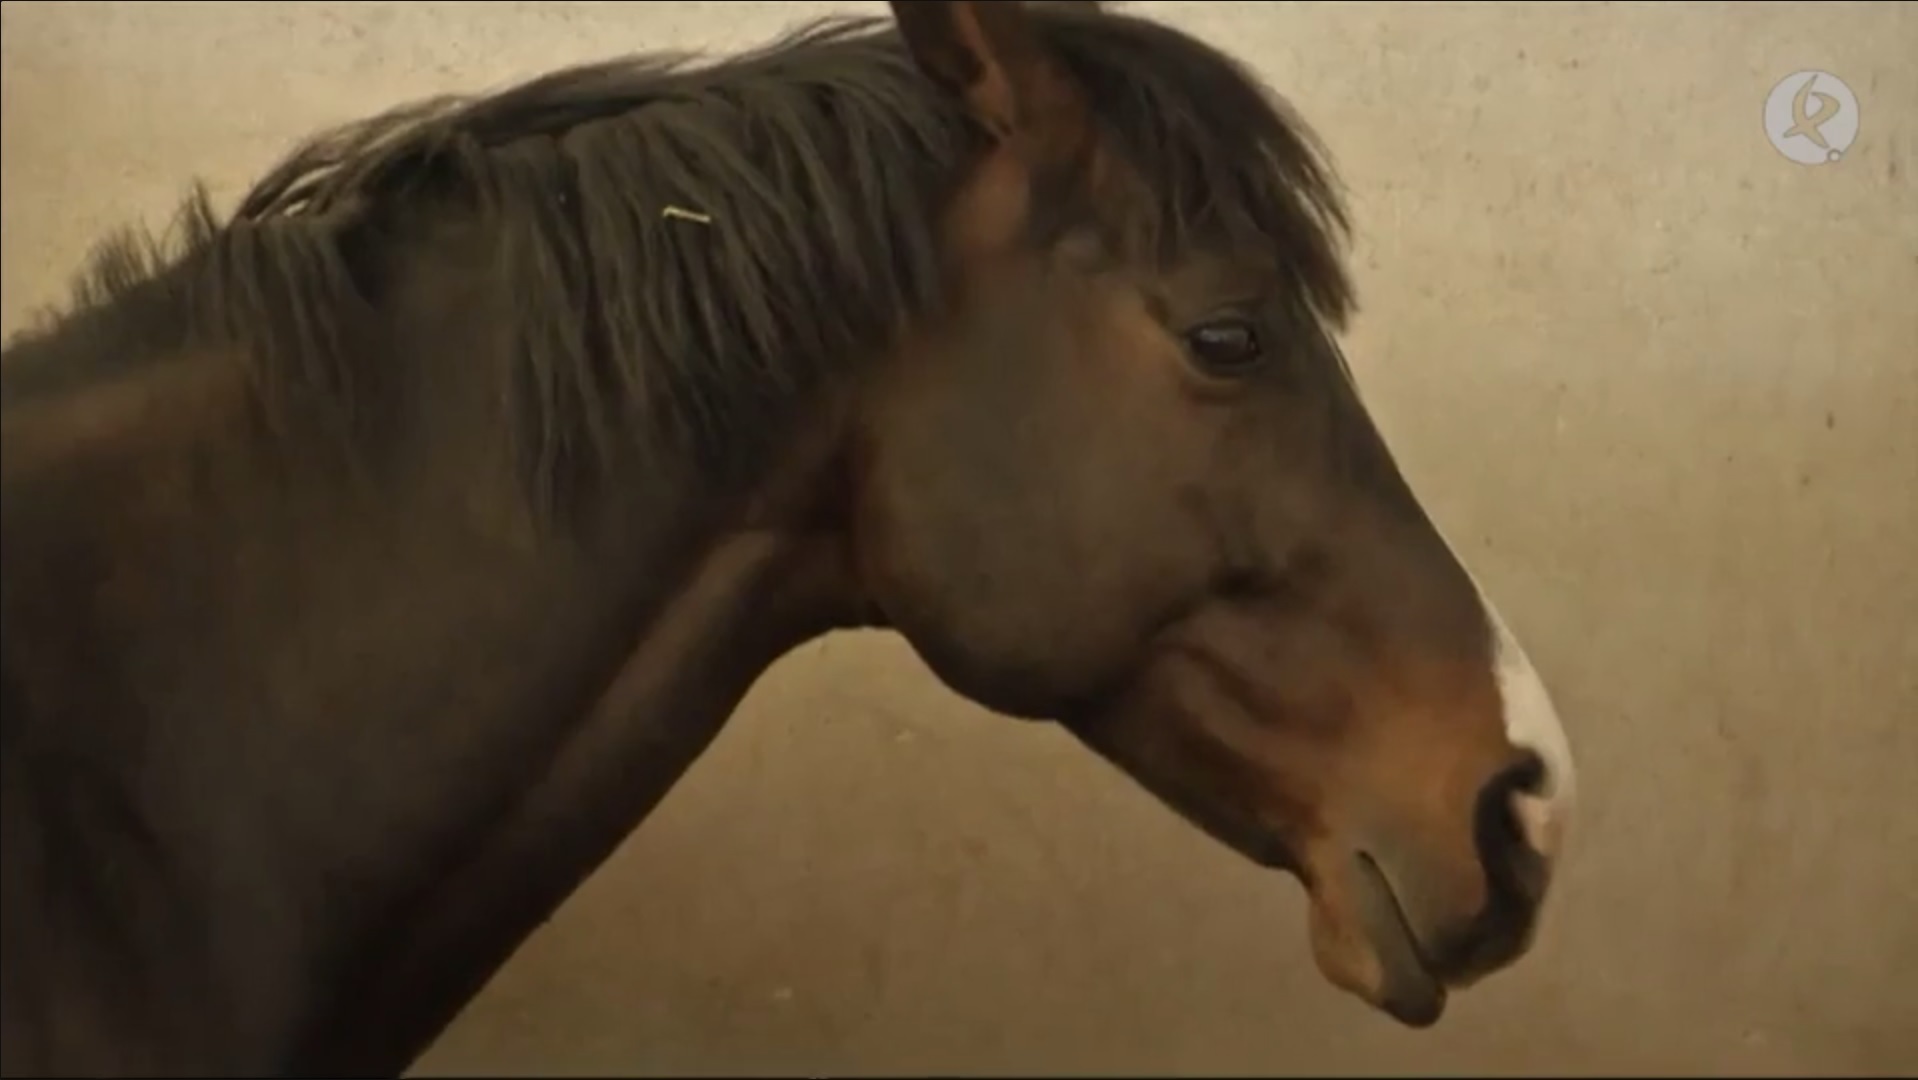 Levakker, el primer caballo hijo de un clon en España